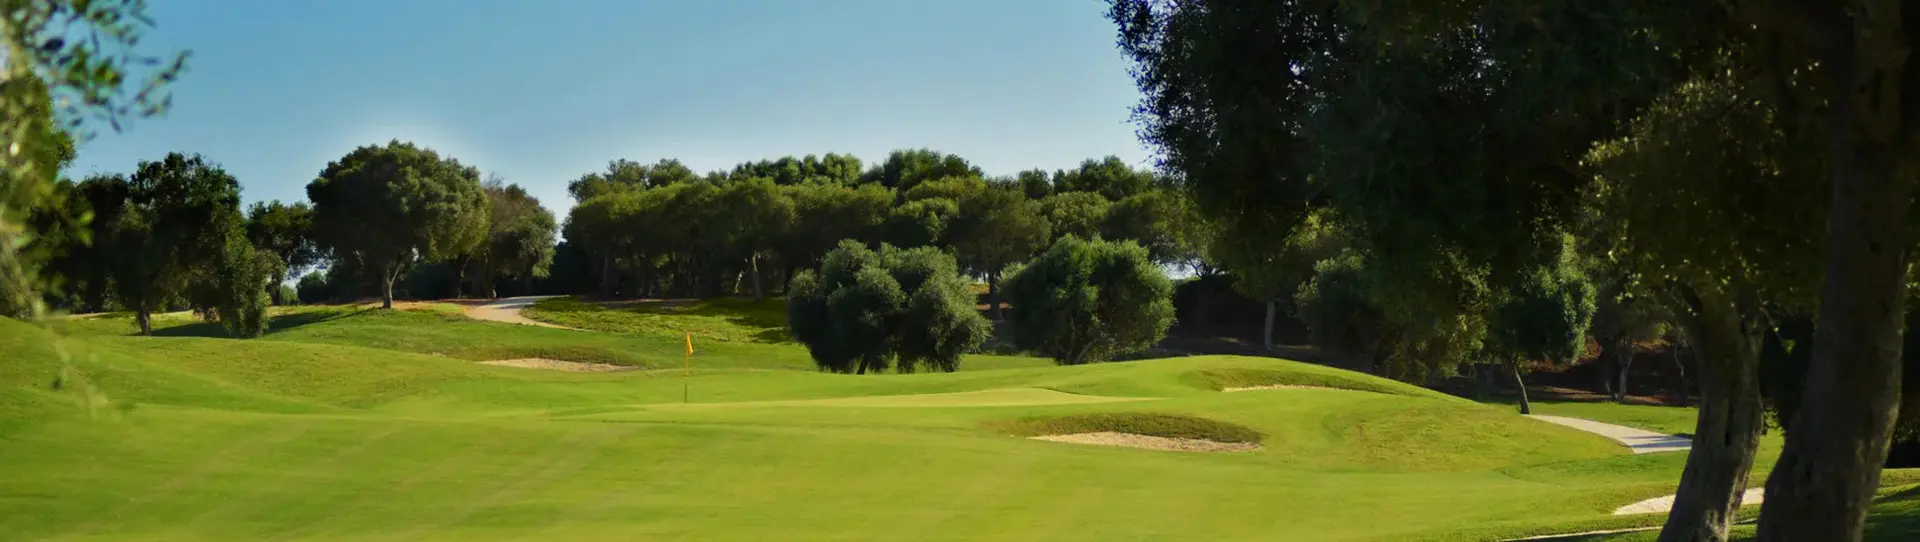 Spain golf holidays - Costa de la Luz 5 Rounds Golf Pack - Photo 3